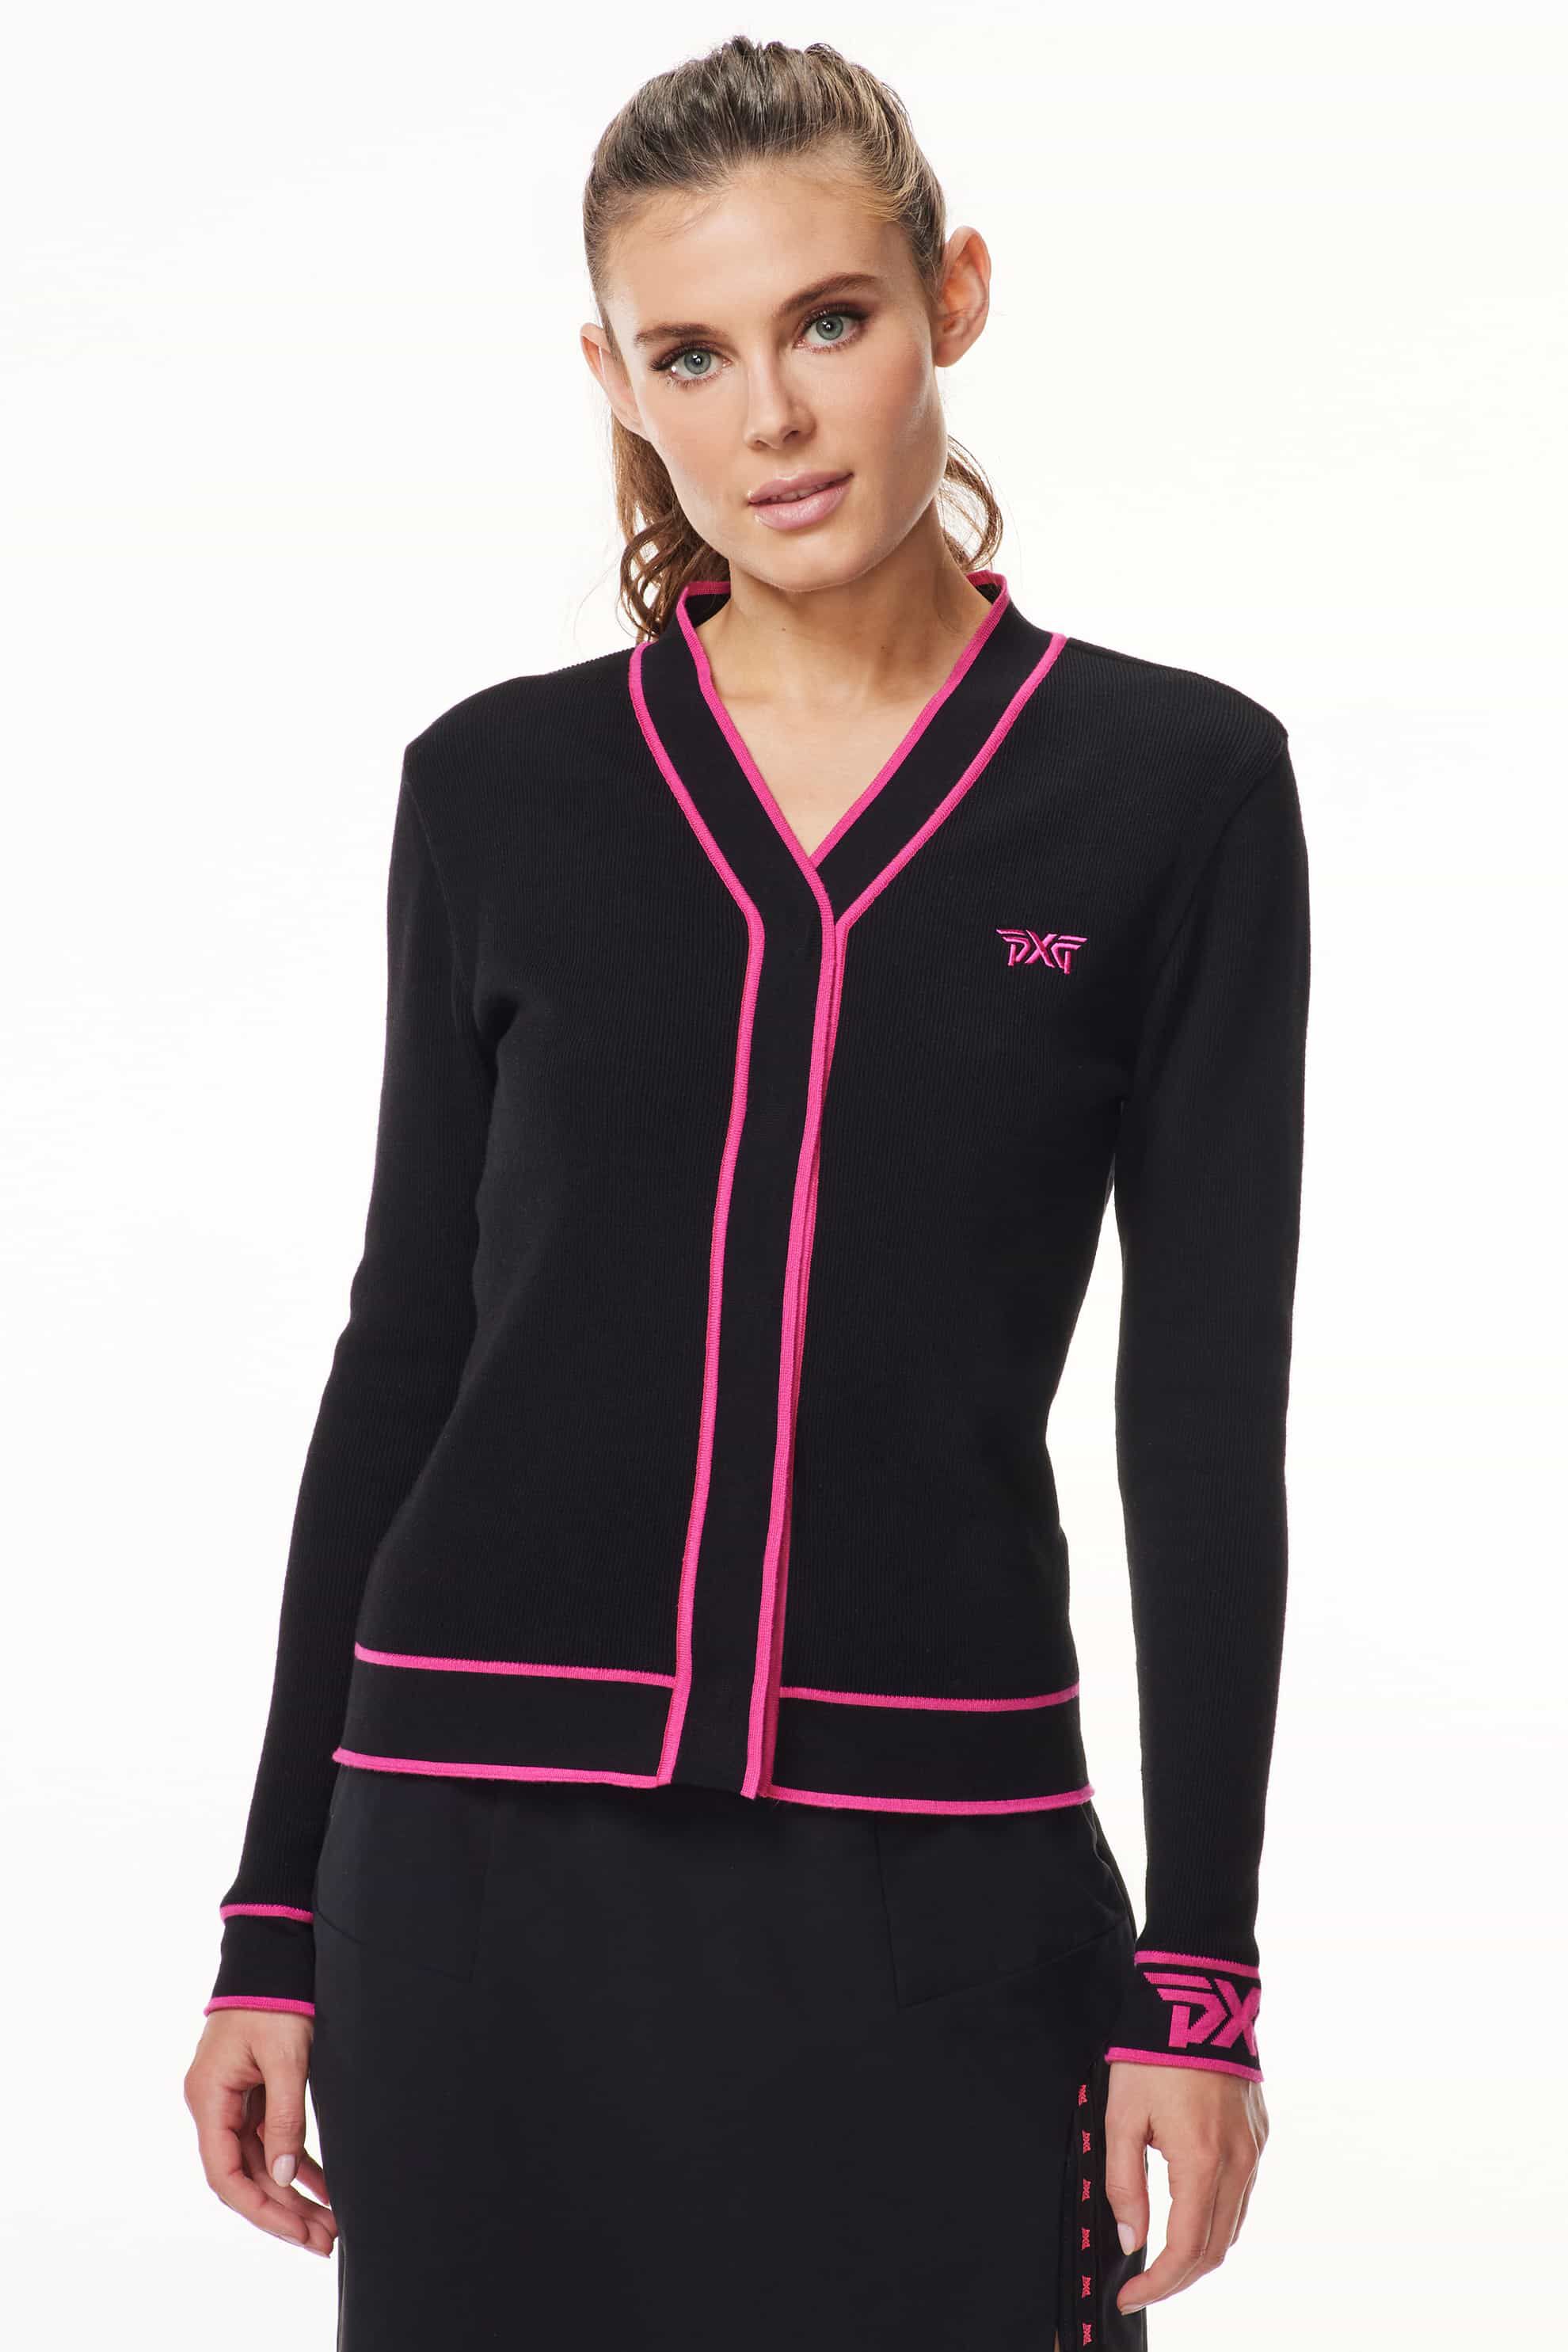 Shop Women's Golf Sweaters, Sweatshirts and Hoodies | PXG JP